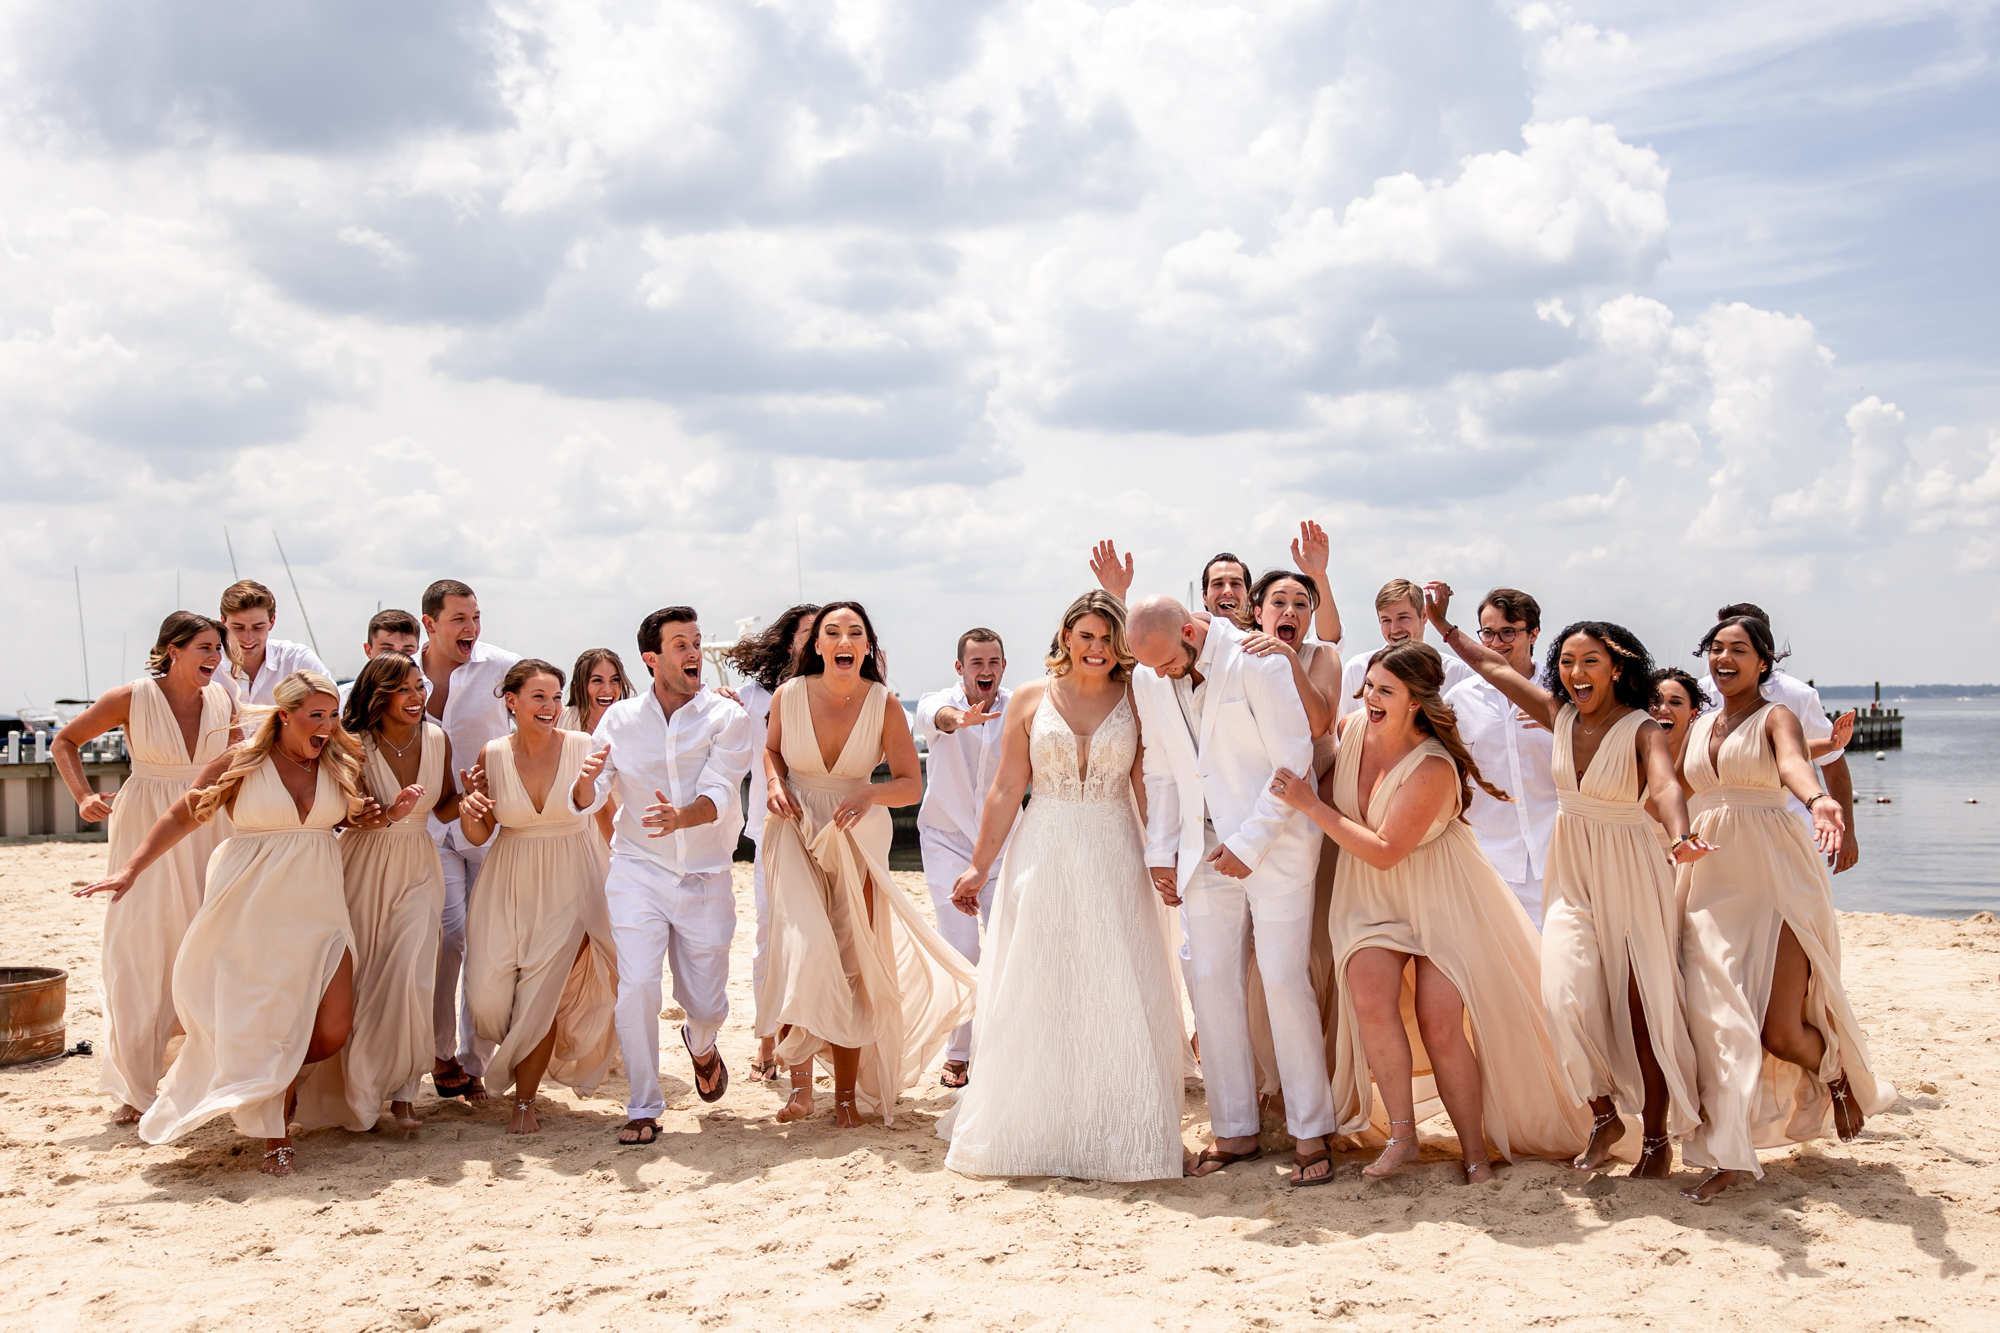 wedding party photos in rehoboth beach, delaware